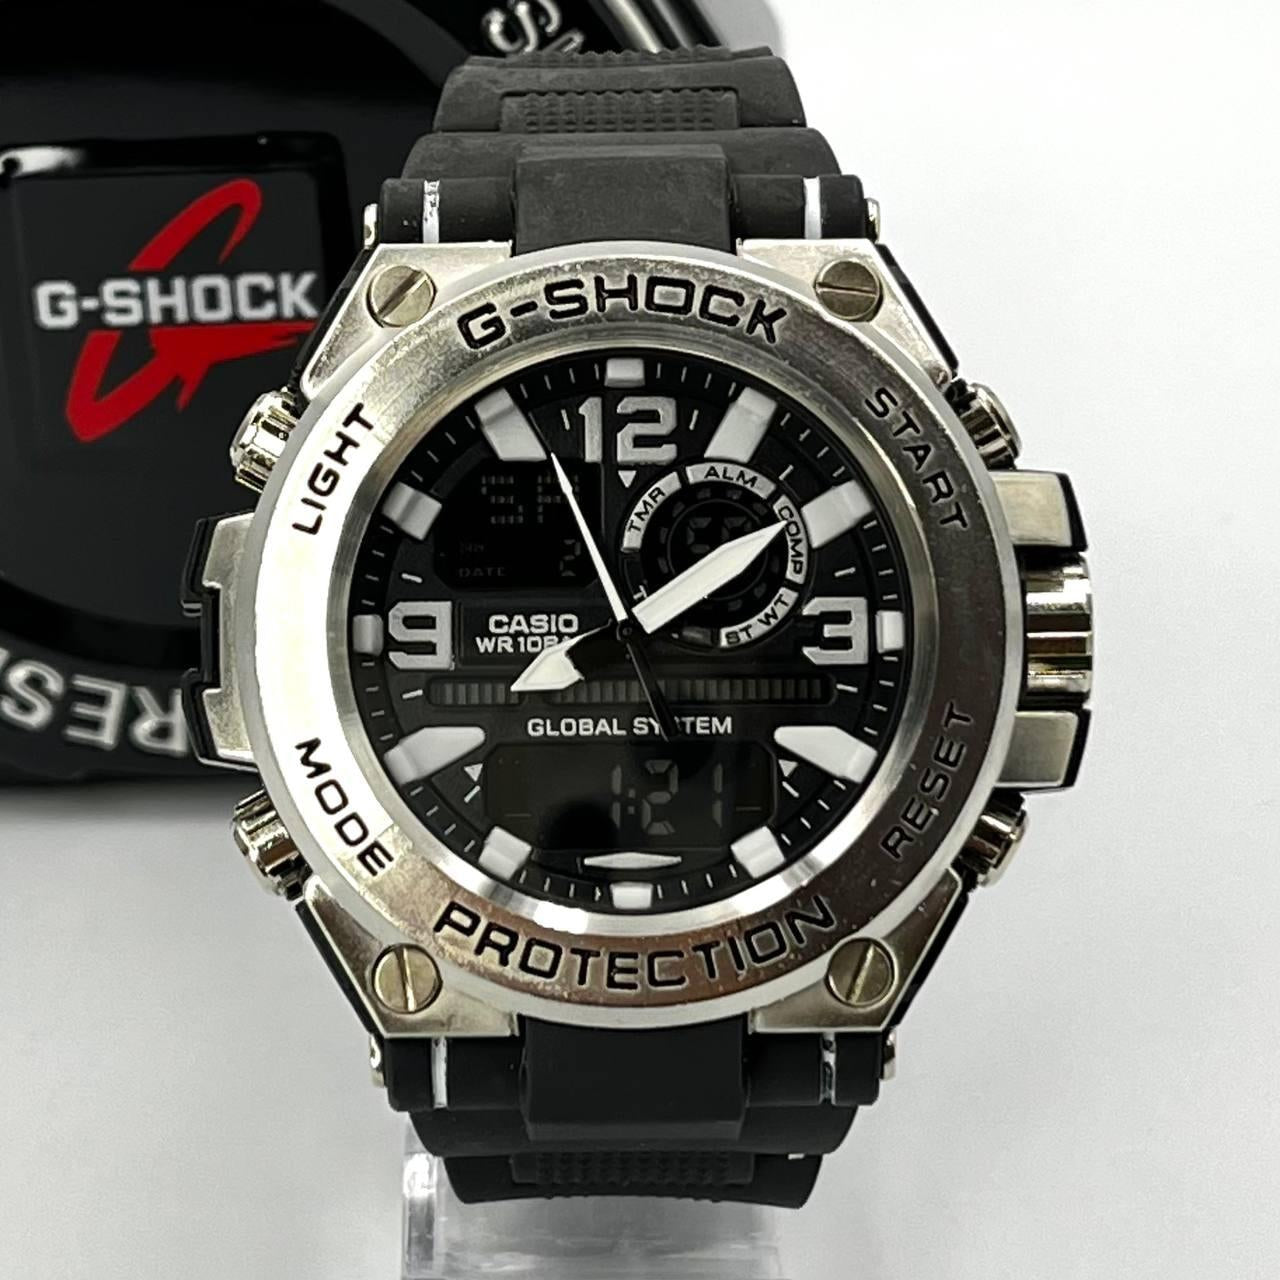 Relógio masculino G-Shock Metal Preto/Prata linha Gold c./caixa prova dagua